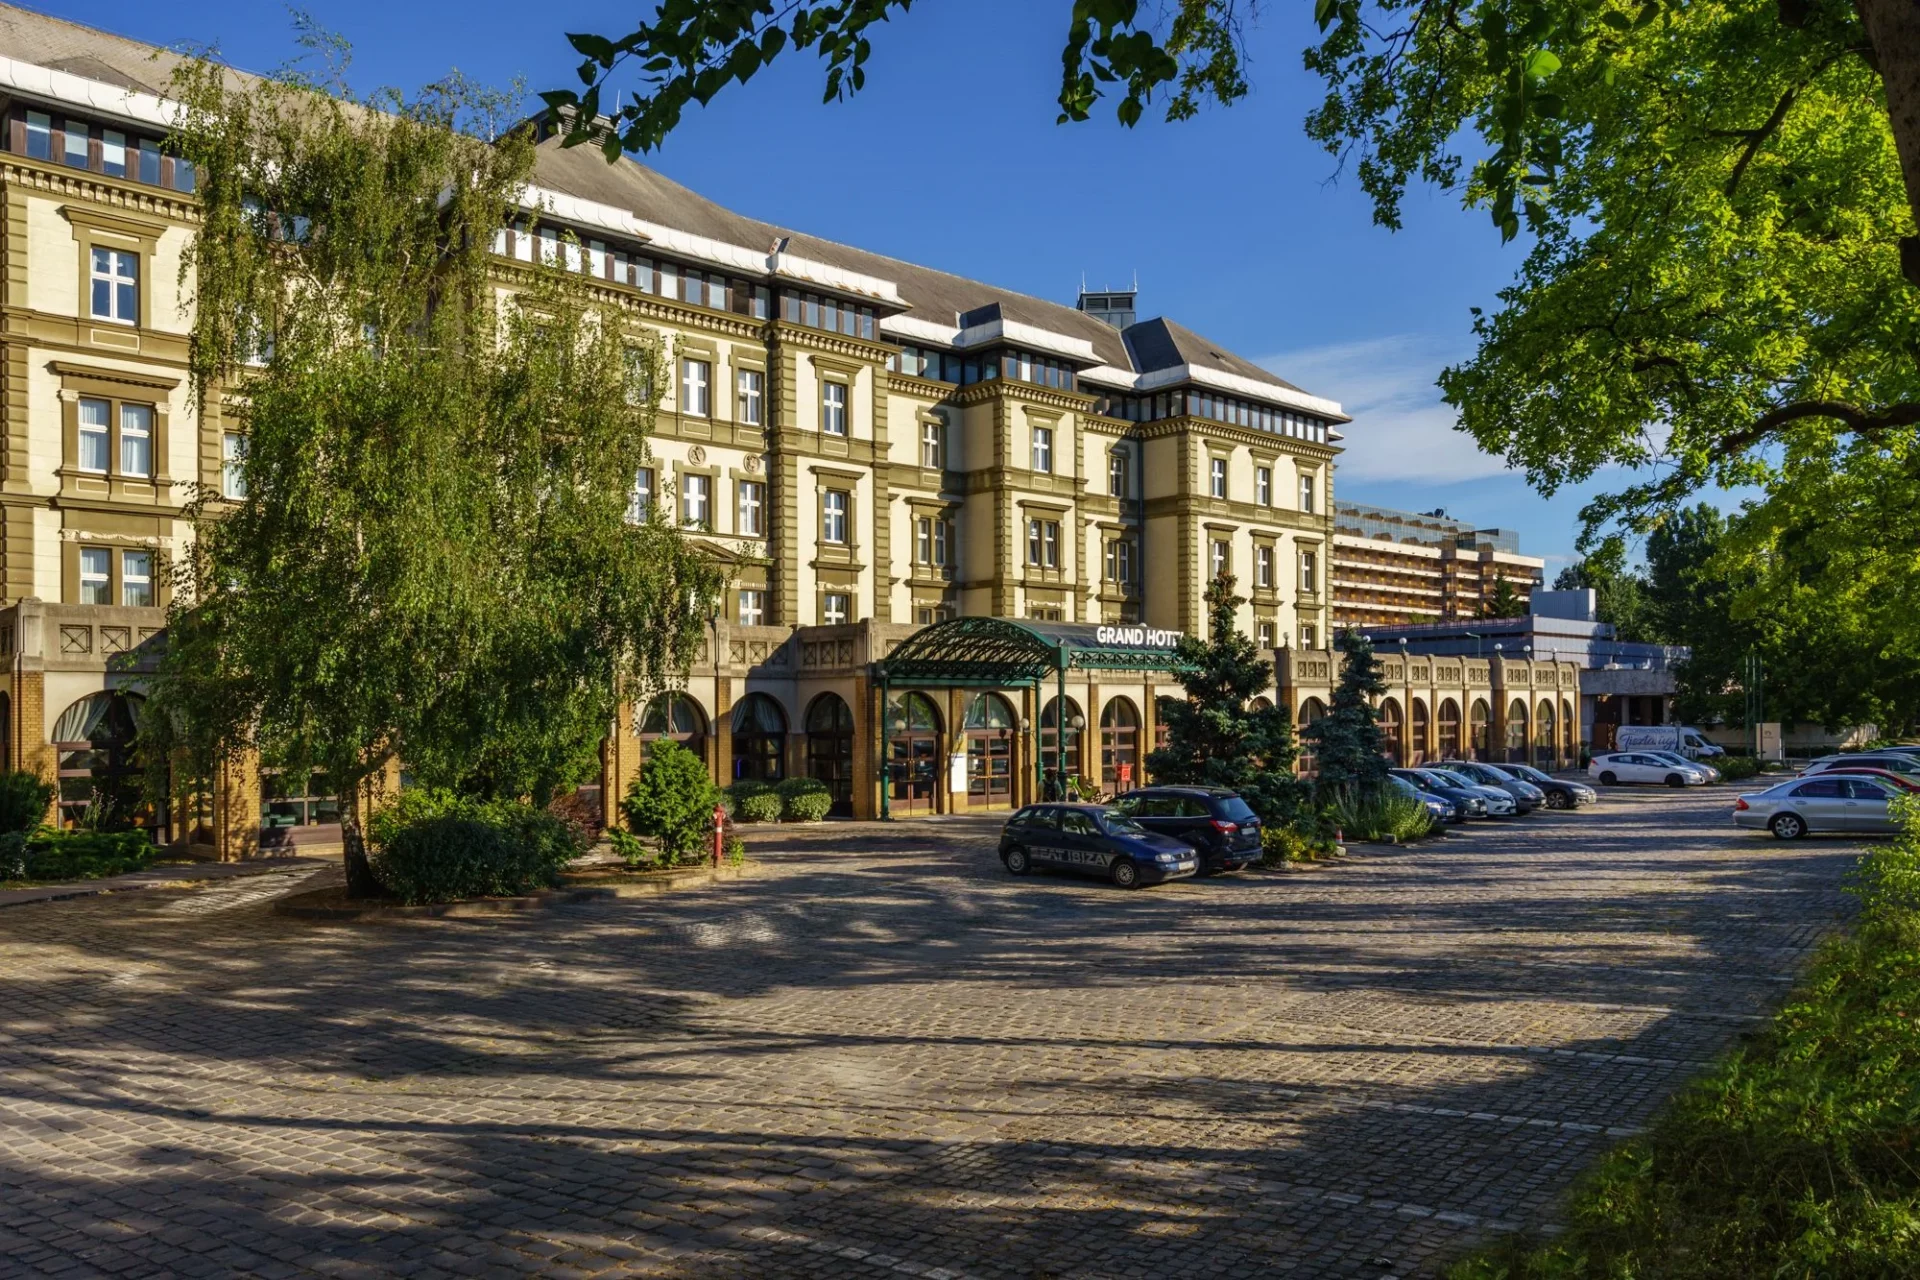 Exterior shot of Danubis Grand Hotel